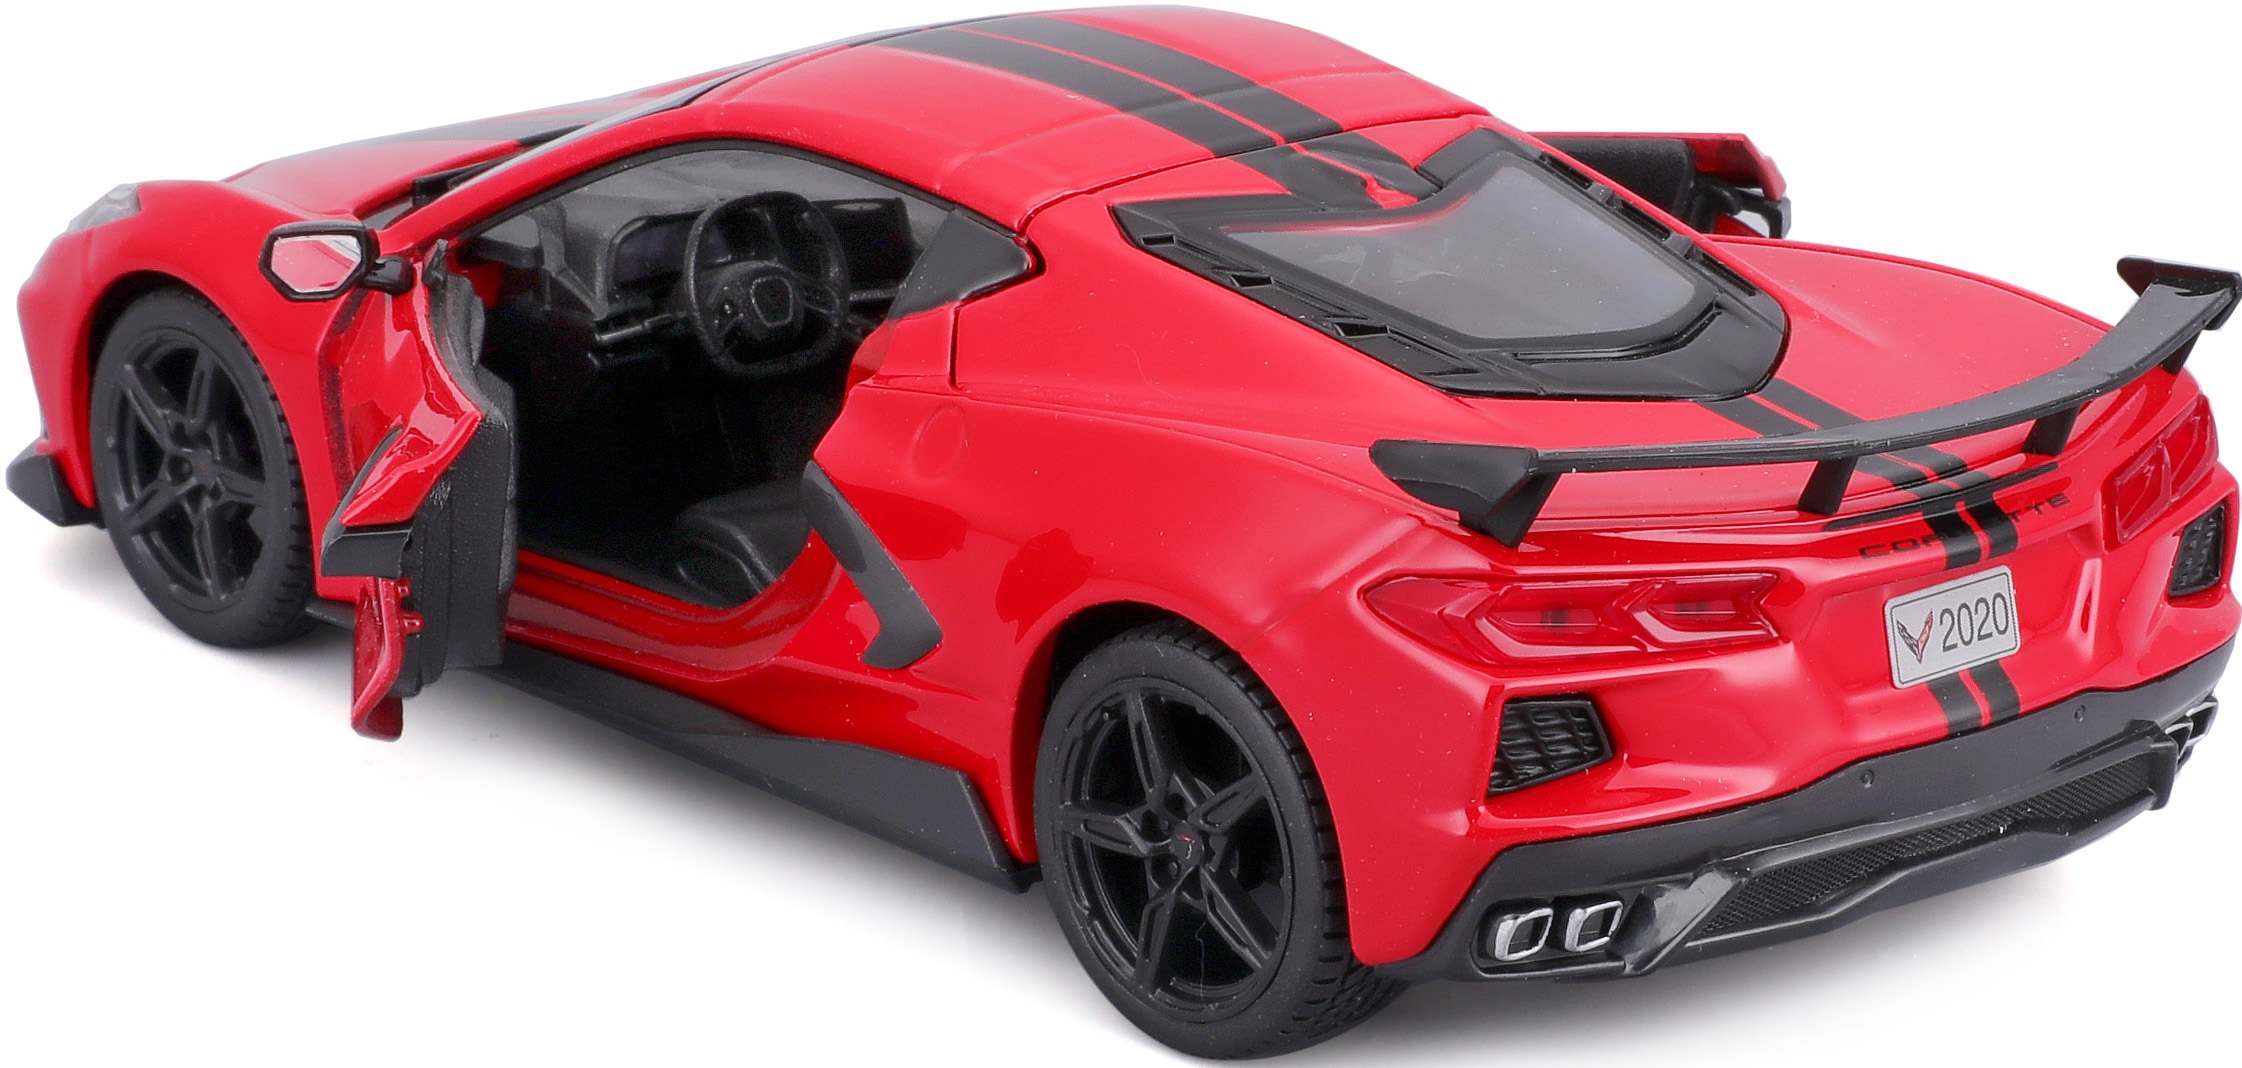 Maisto® Modellauto »Corvette Stingray Coupe 20, rot«, 1:24